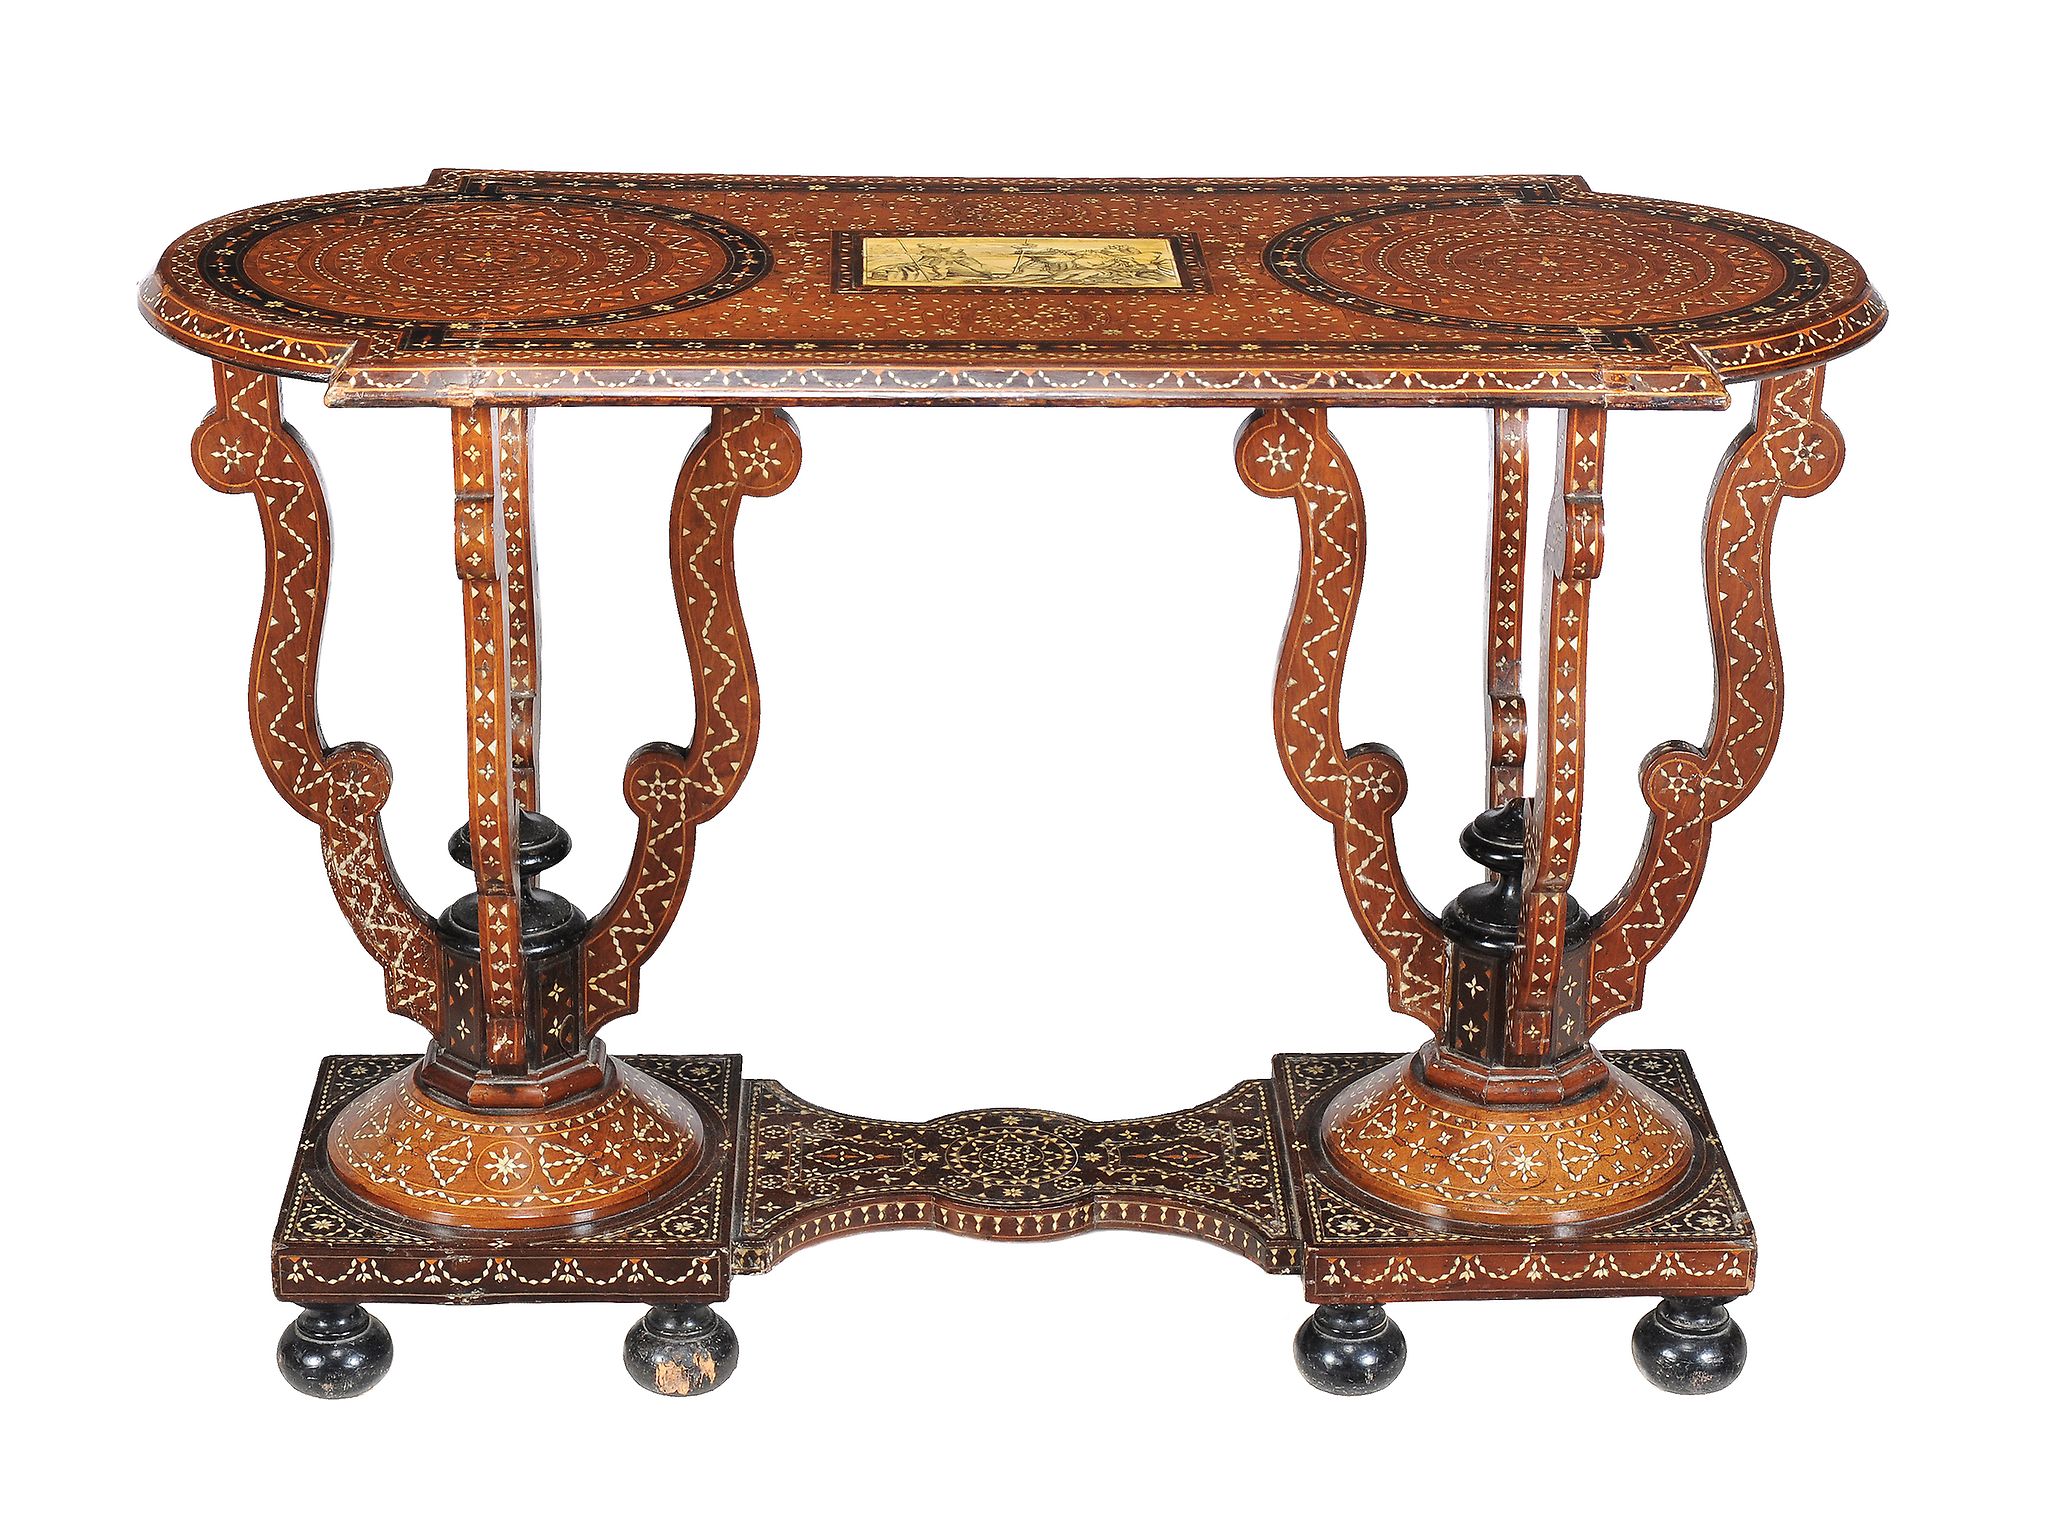 An Italian hardwood and bone inlaid centre table, in Islamic taste , second half 19th century,